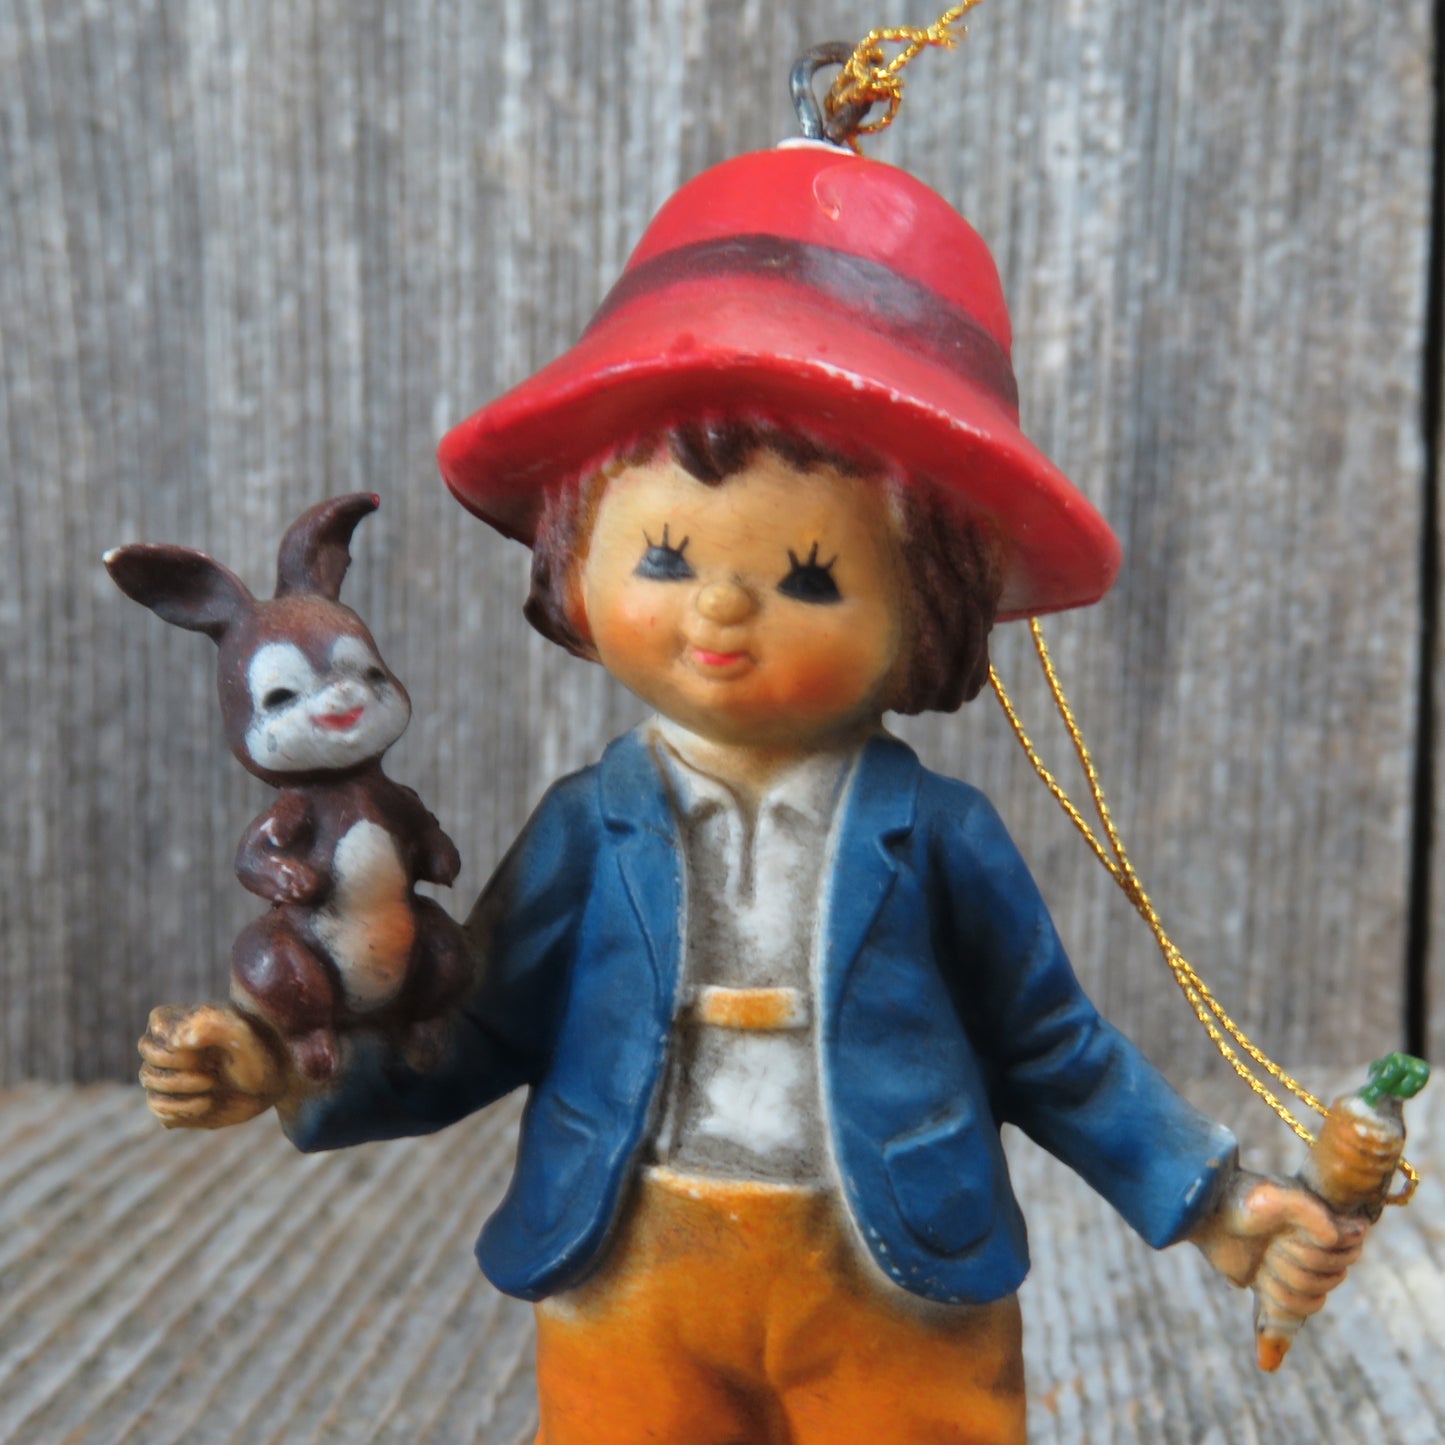 Vintage Boy with Bunny Rabbit and Carrot Christmas Ornament 1983 Bradford 7412 - At Grandma's Table